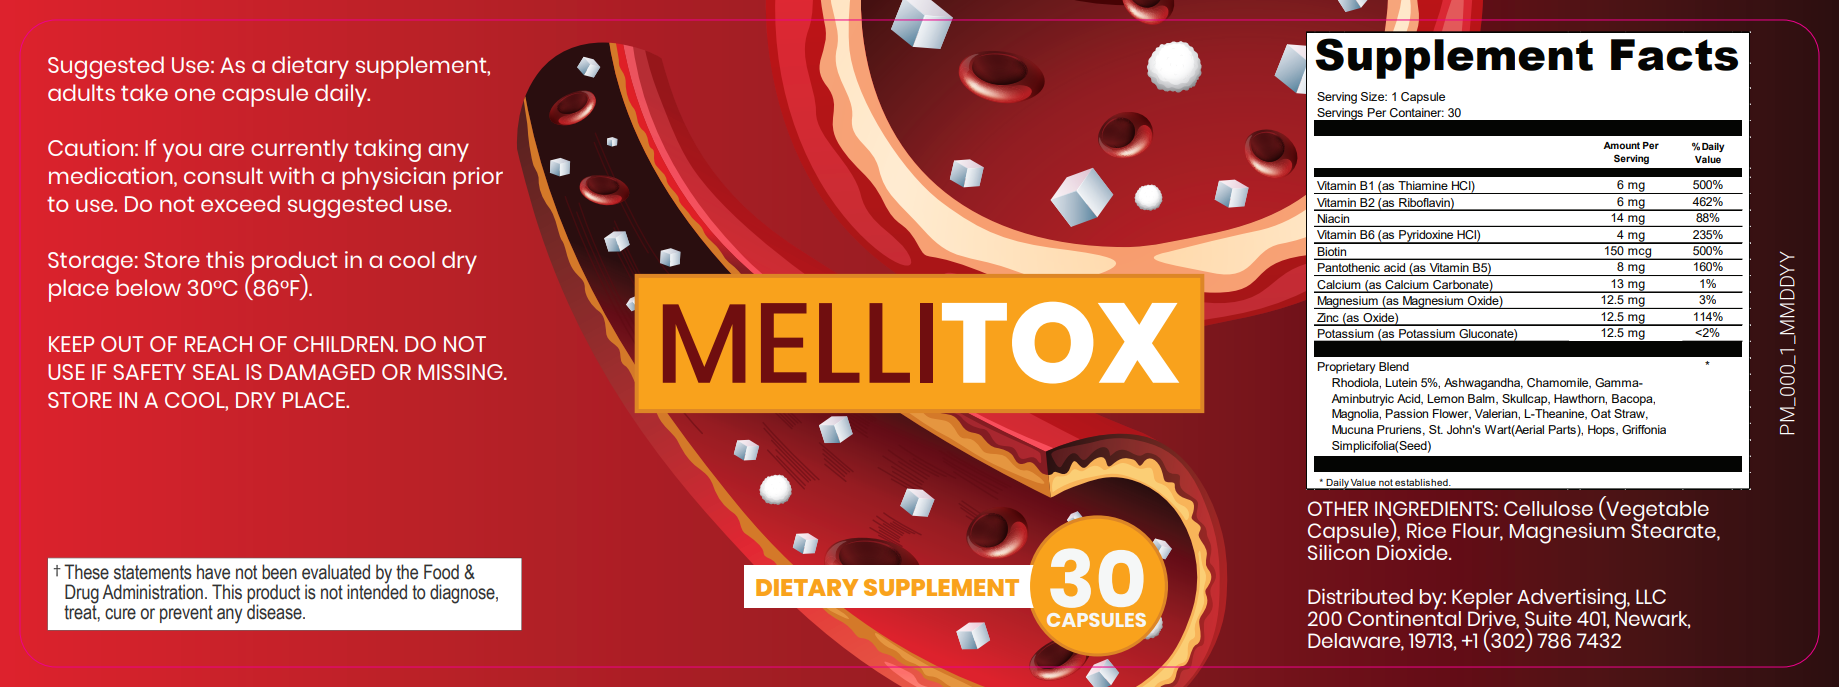 Mellitox-Ingredients-Label